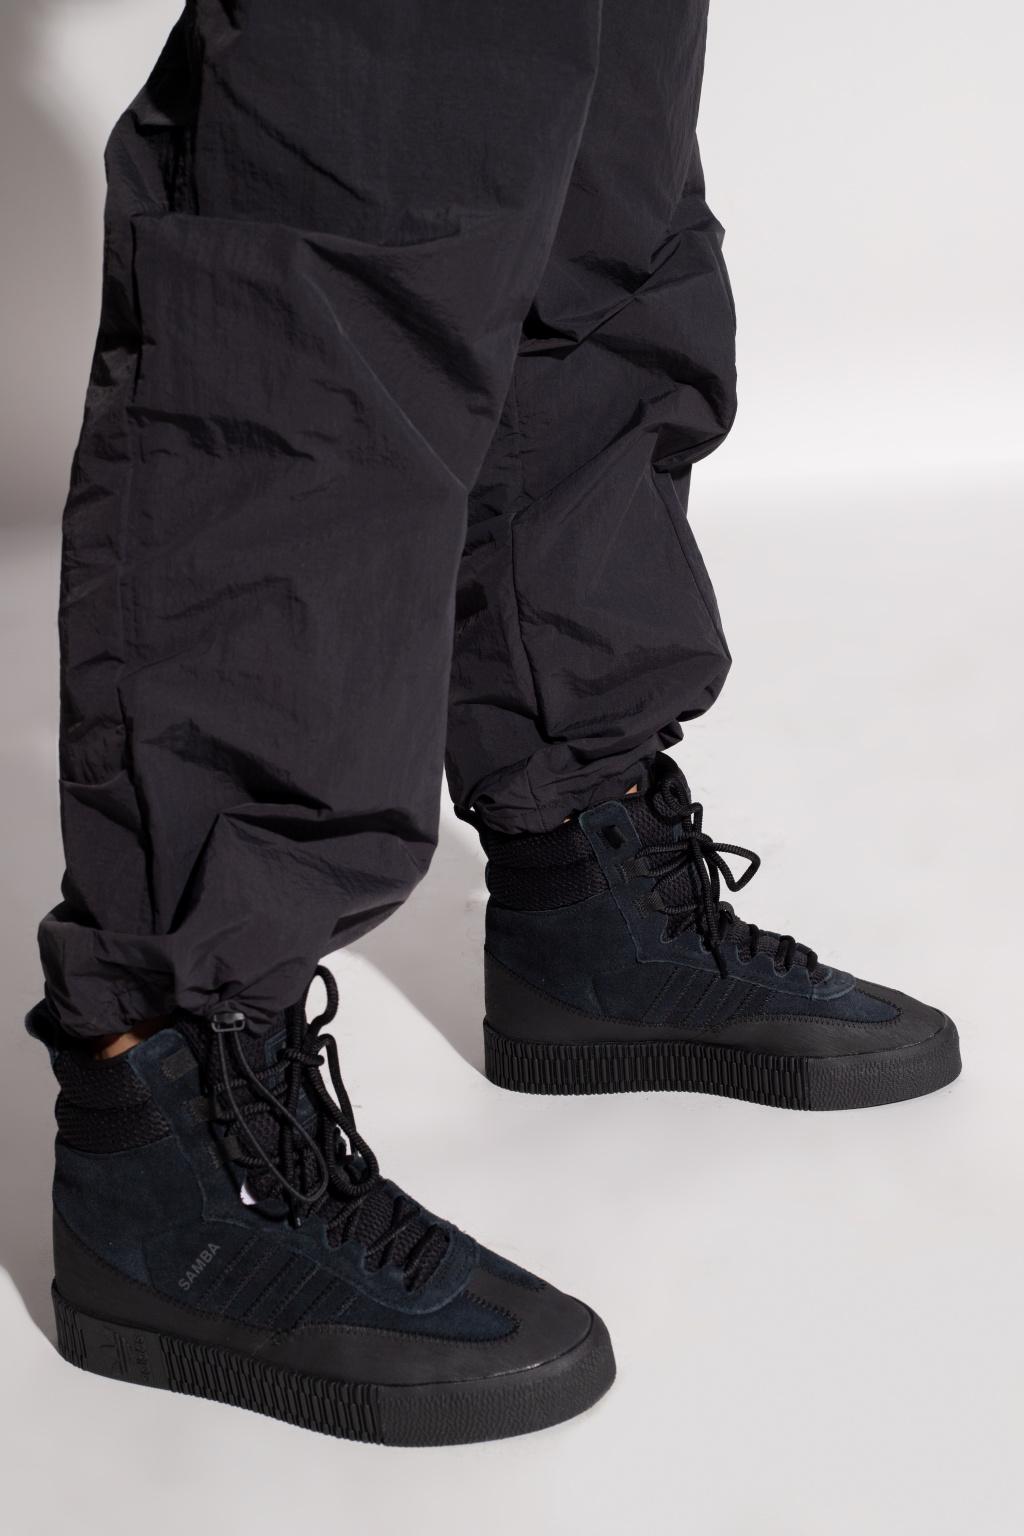 adidas Originals Boot' Sneakers Black Lyst